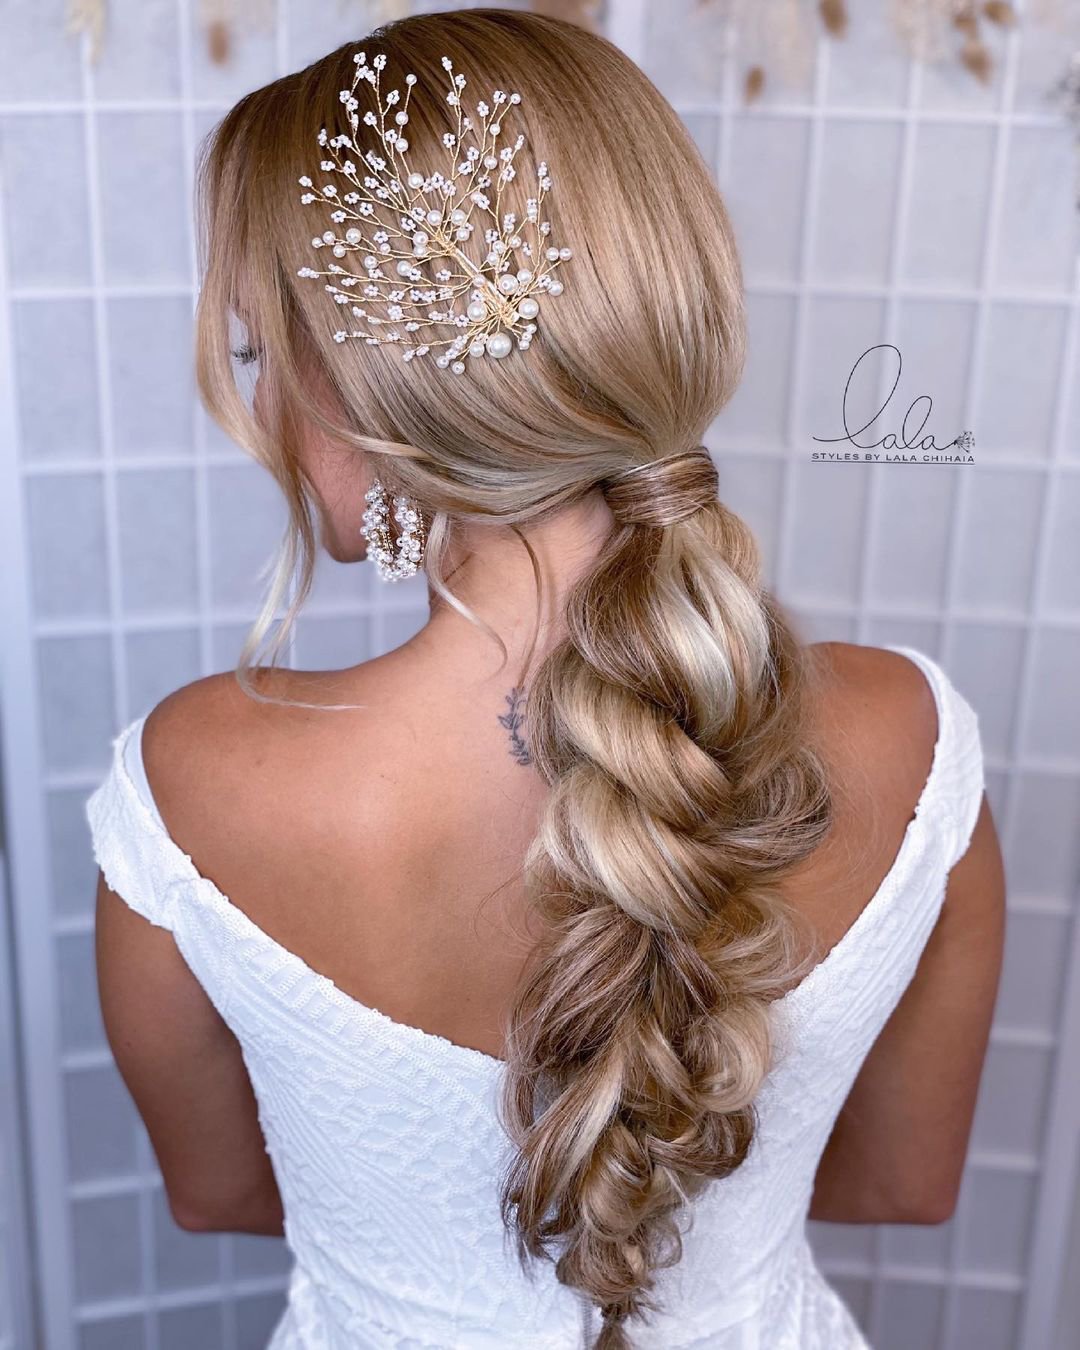 bridesmaid hairstyles for wedding braid on long blonde hair lalasupdos